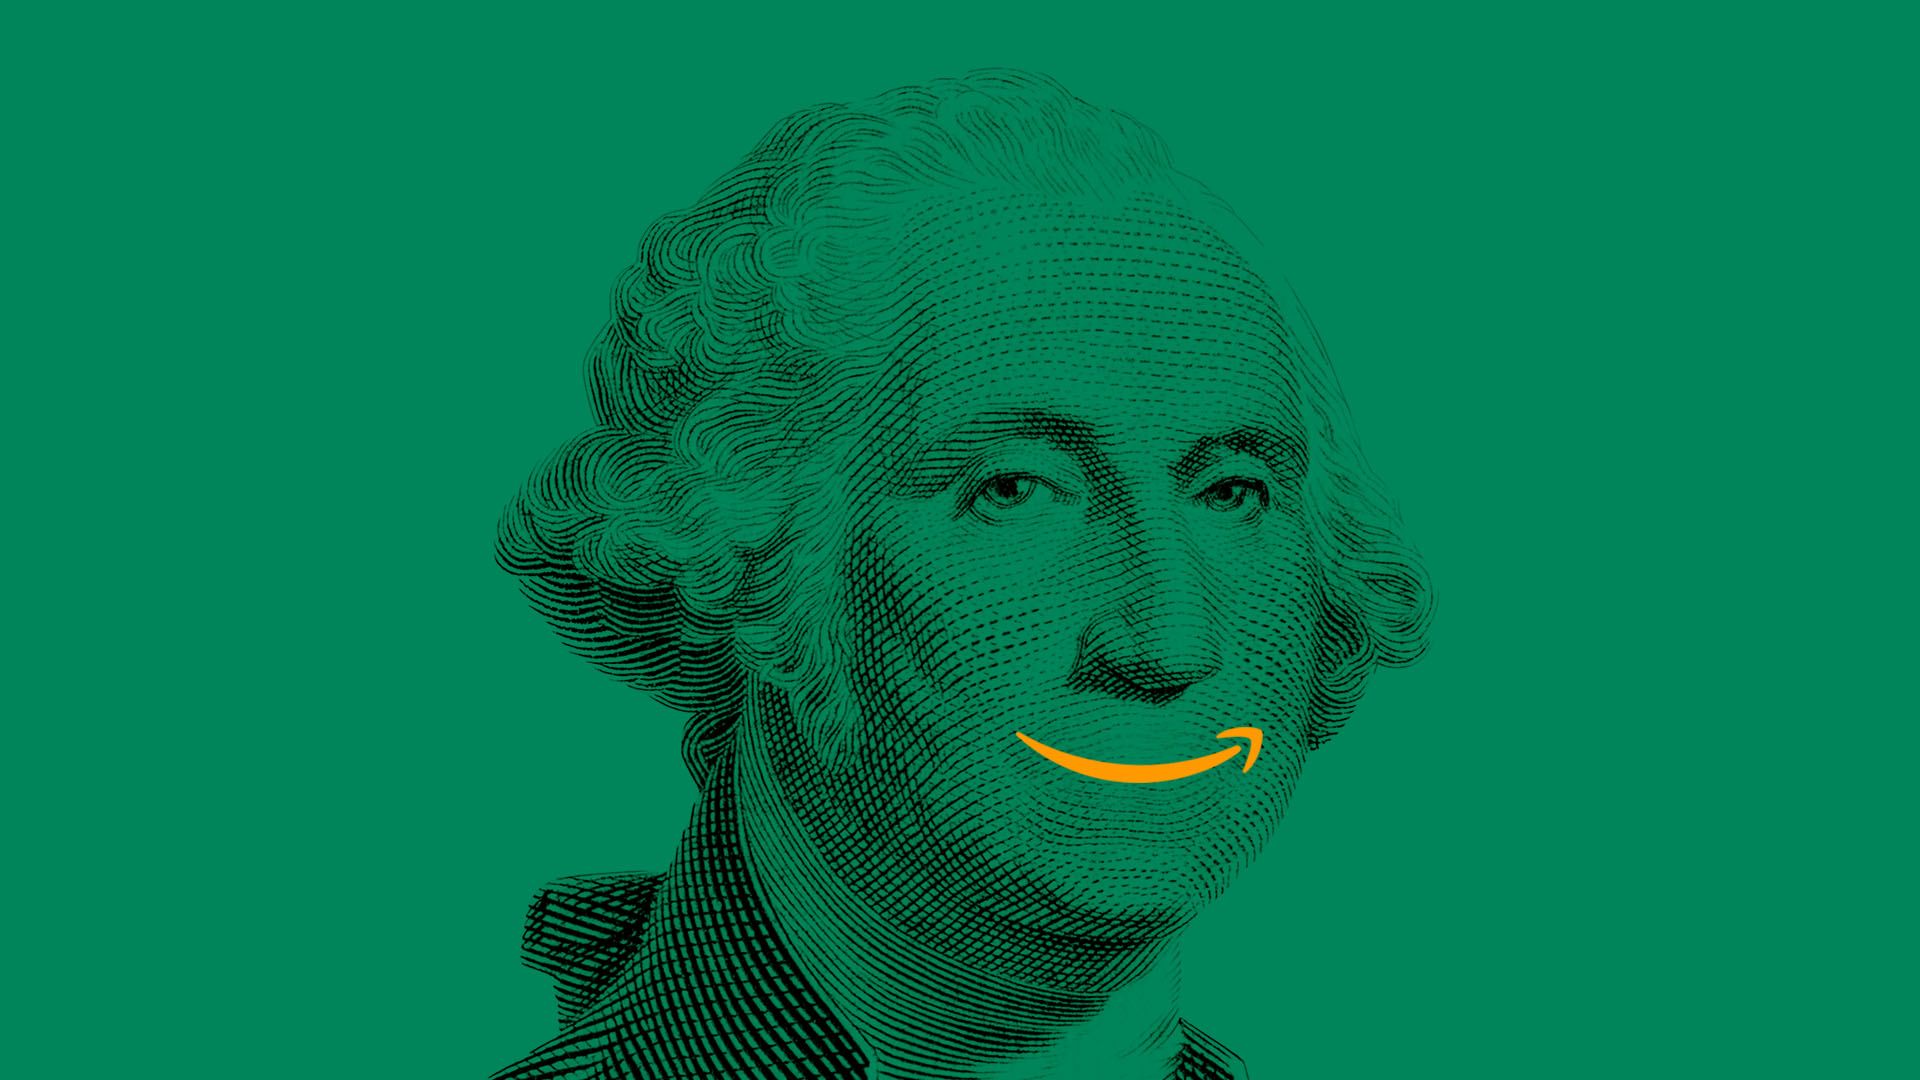 An Amazon logo overlaid on George Washington's mouth